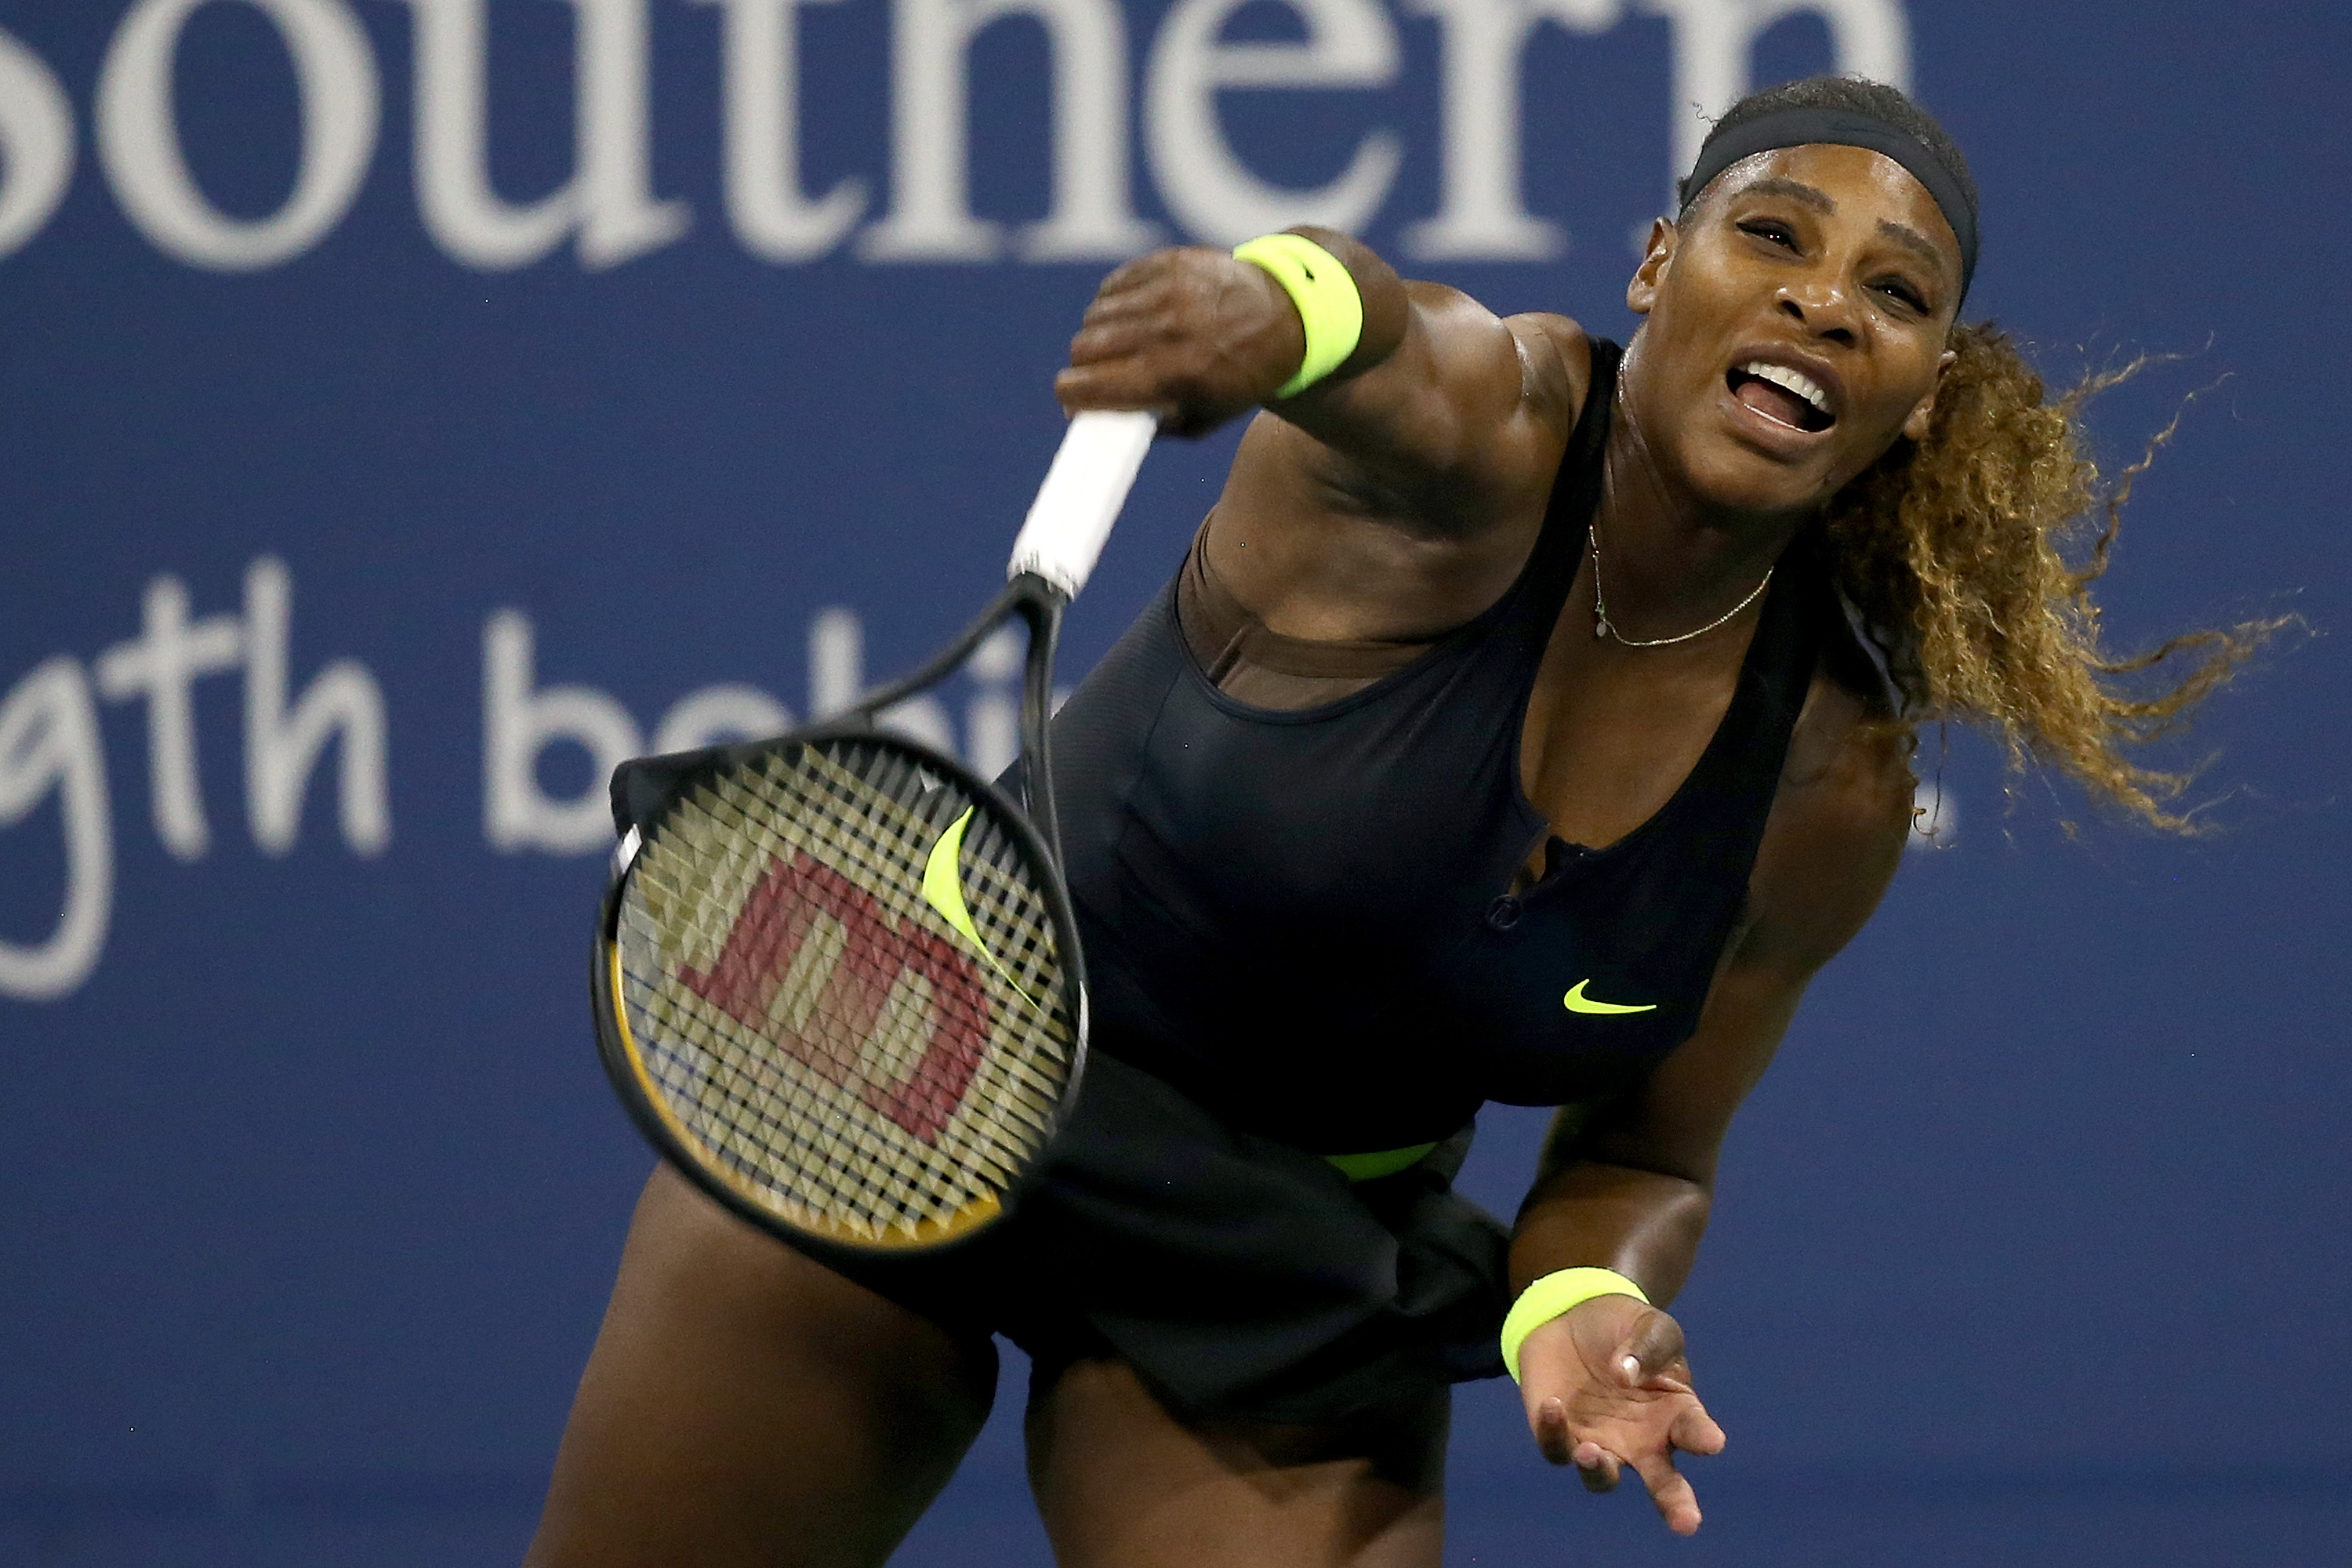 How to watch Serena Williams, Novak Djokovic at 2020 U.S